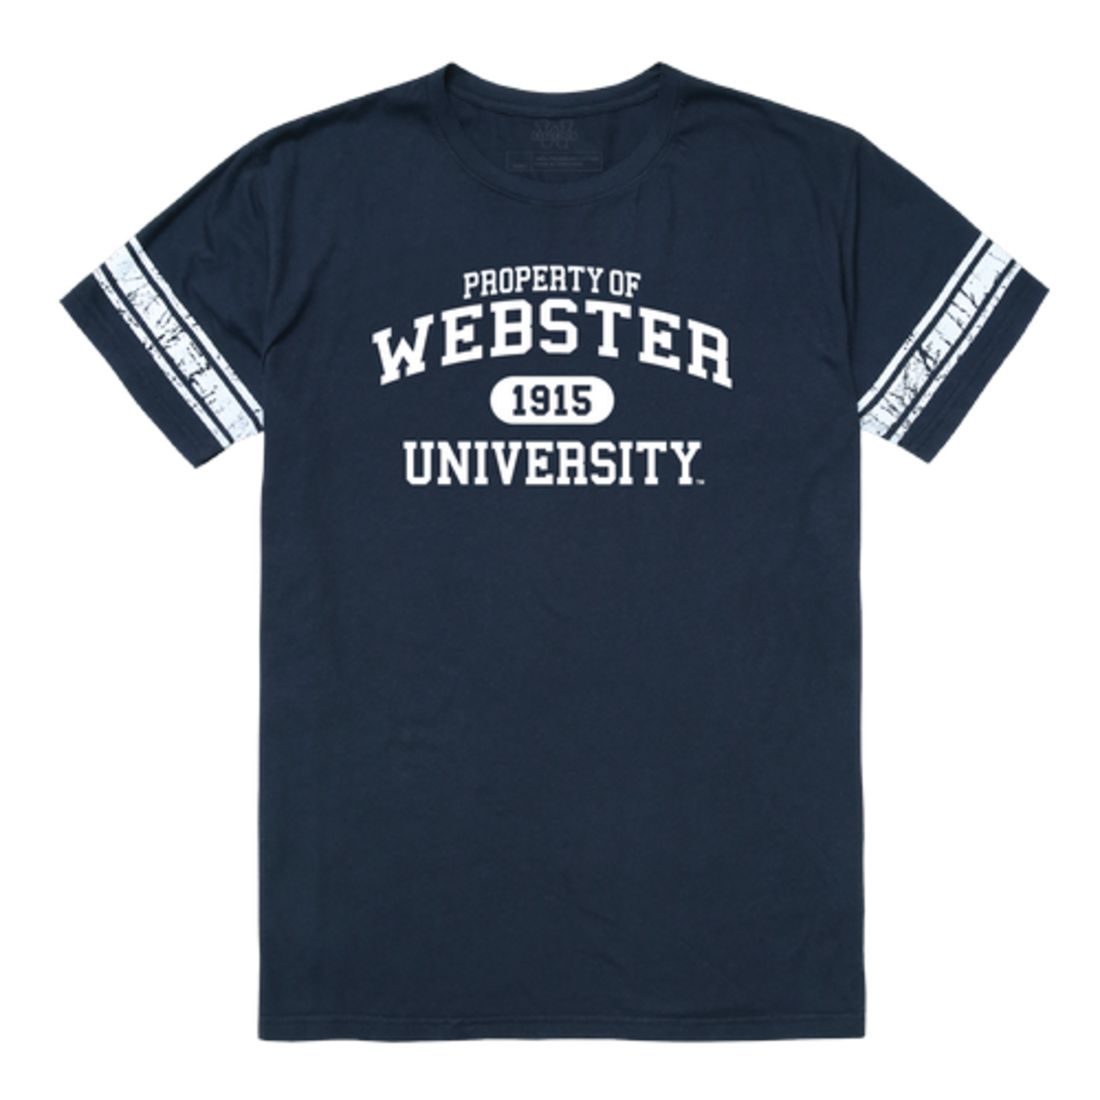 Webster University Gorlocks Property Football T-Shirt Tee